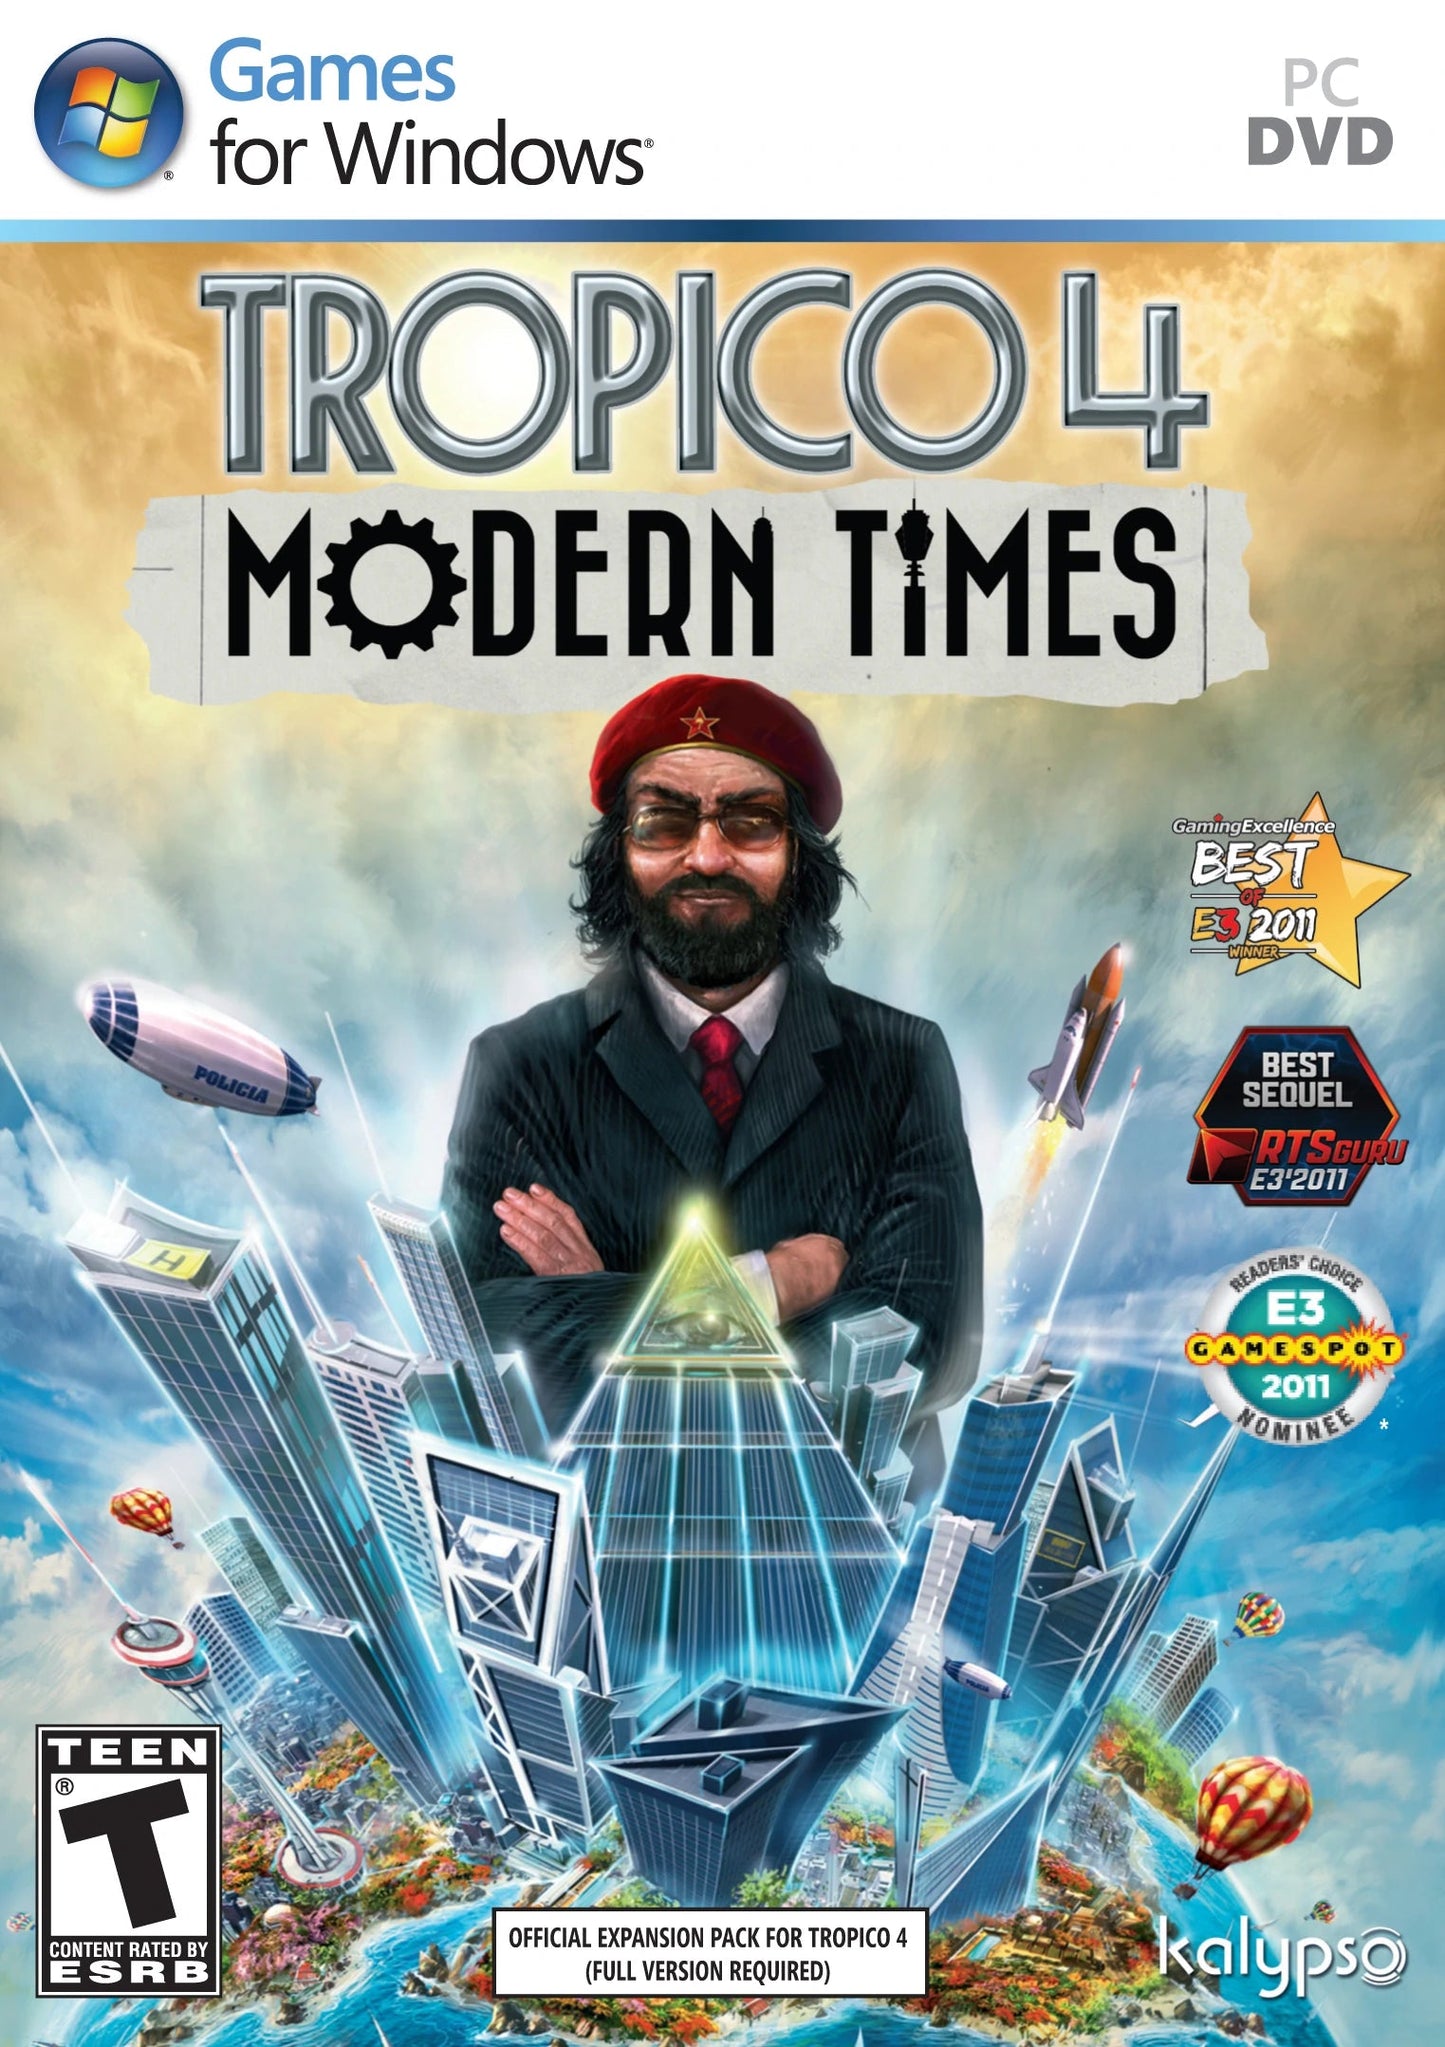 Tropico 4 Modern Times - NOORHS Latinoamérica, S.A. de C.V.